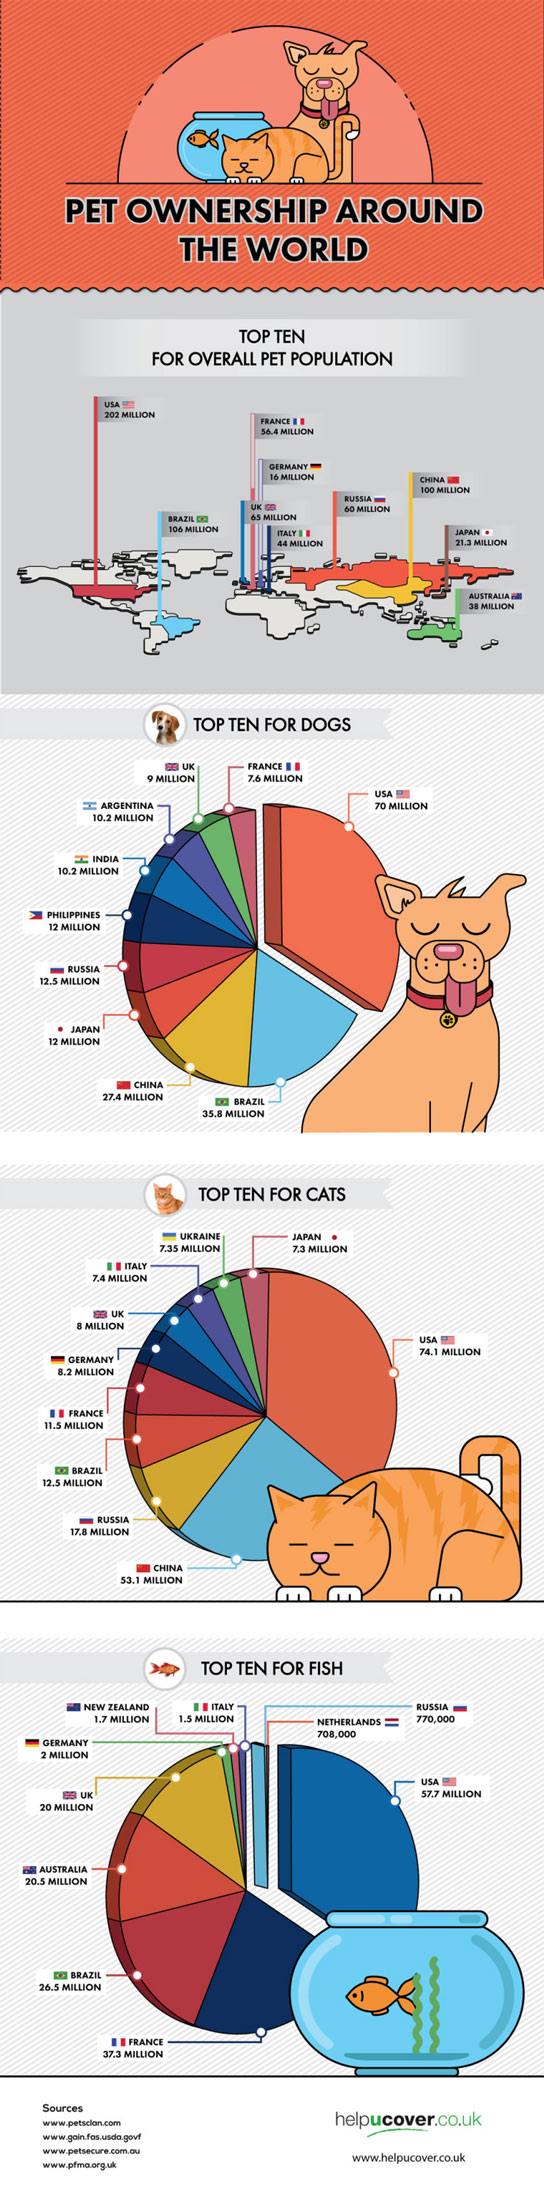 Pet-Ownership-Around-the-World